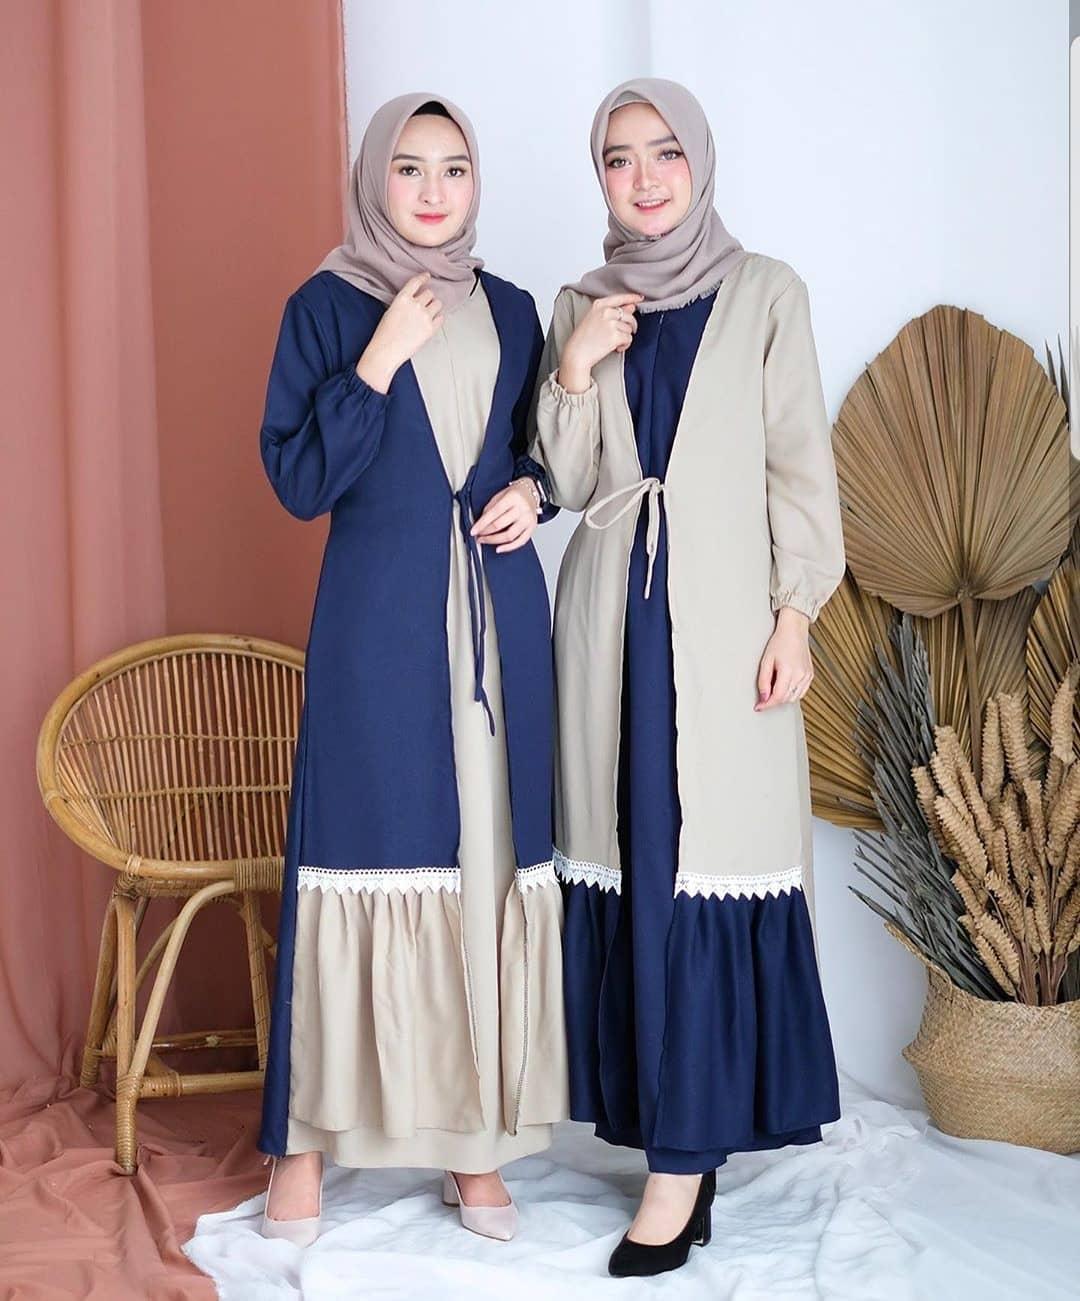 Baju Muslim Modern Gamis NANAMI DRESS Mosscrape Mix Renda Terusan Wanita Paling Laris Dan Trendy Baju Panjang Polos Muslim Dress Pesta Terbaru Maxi Muslimah Termurah Pakaian Modis Simple Casual Terbaru 2019